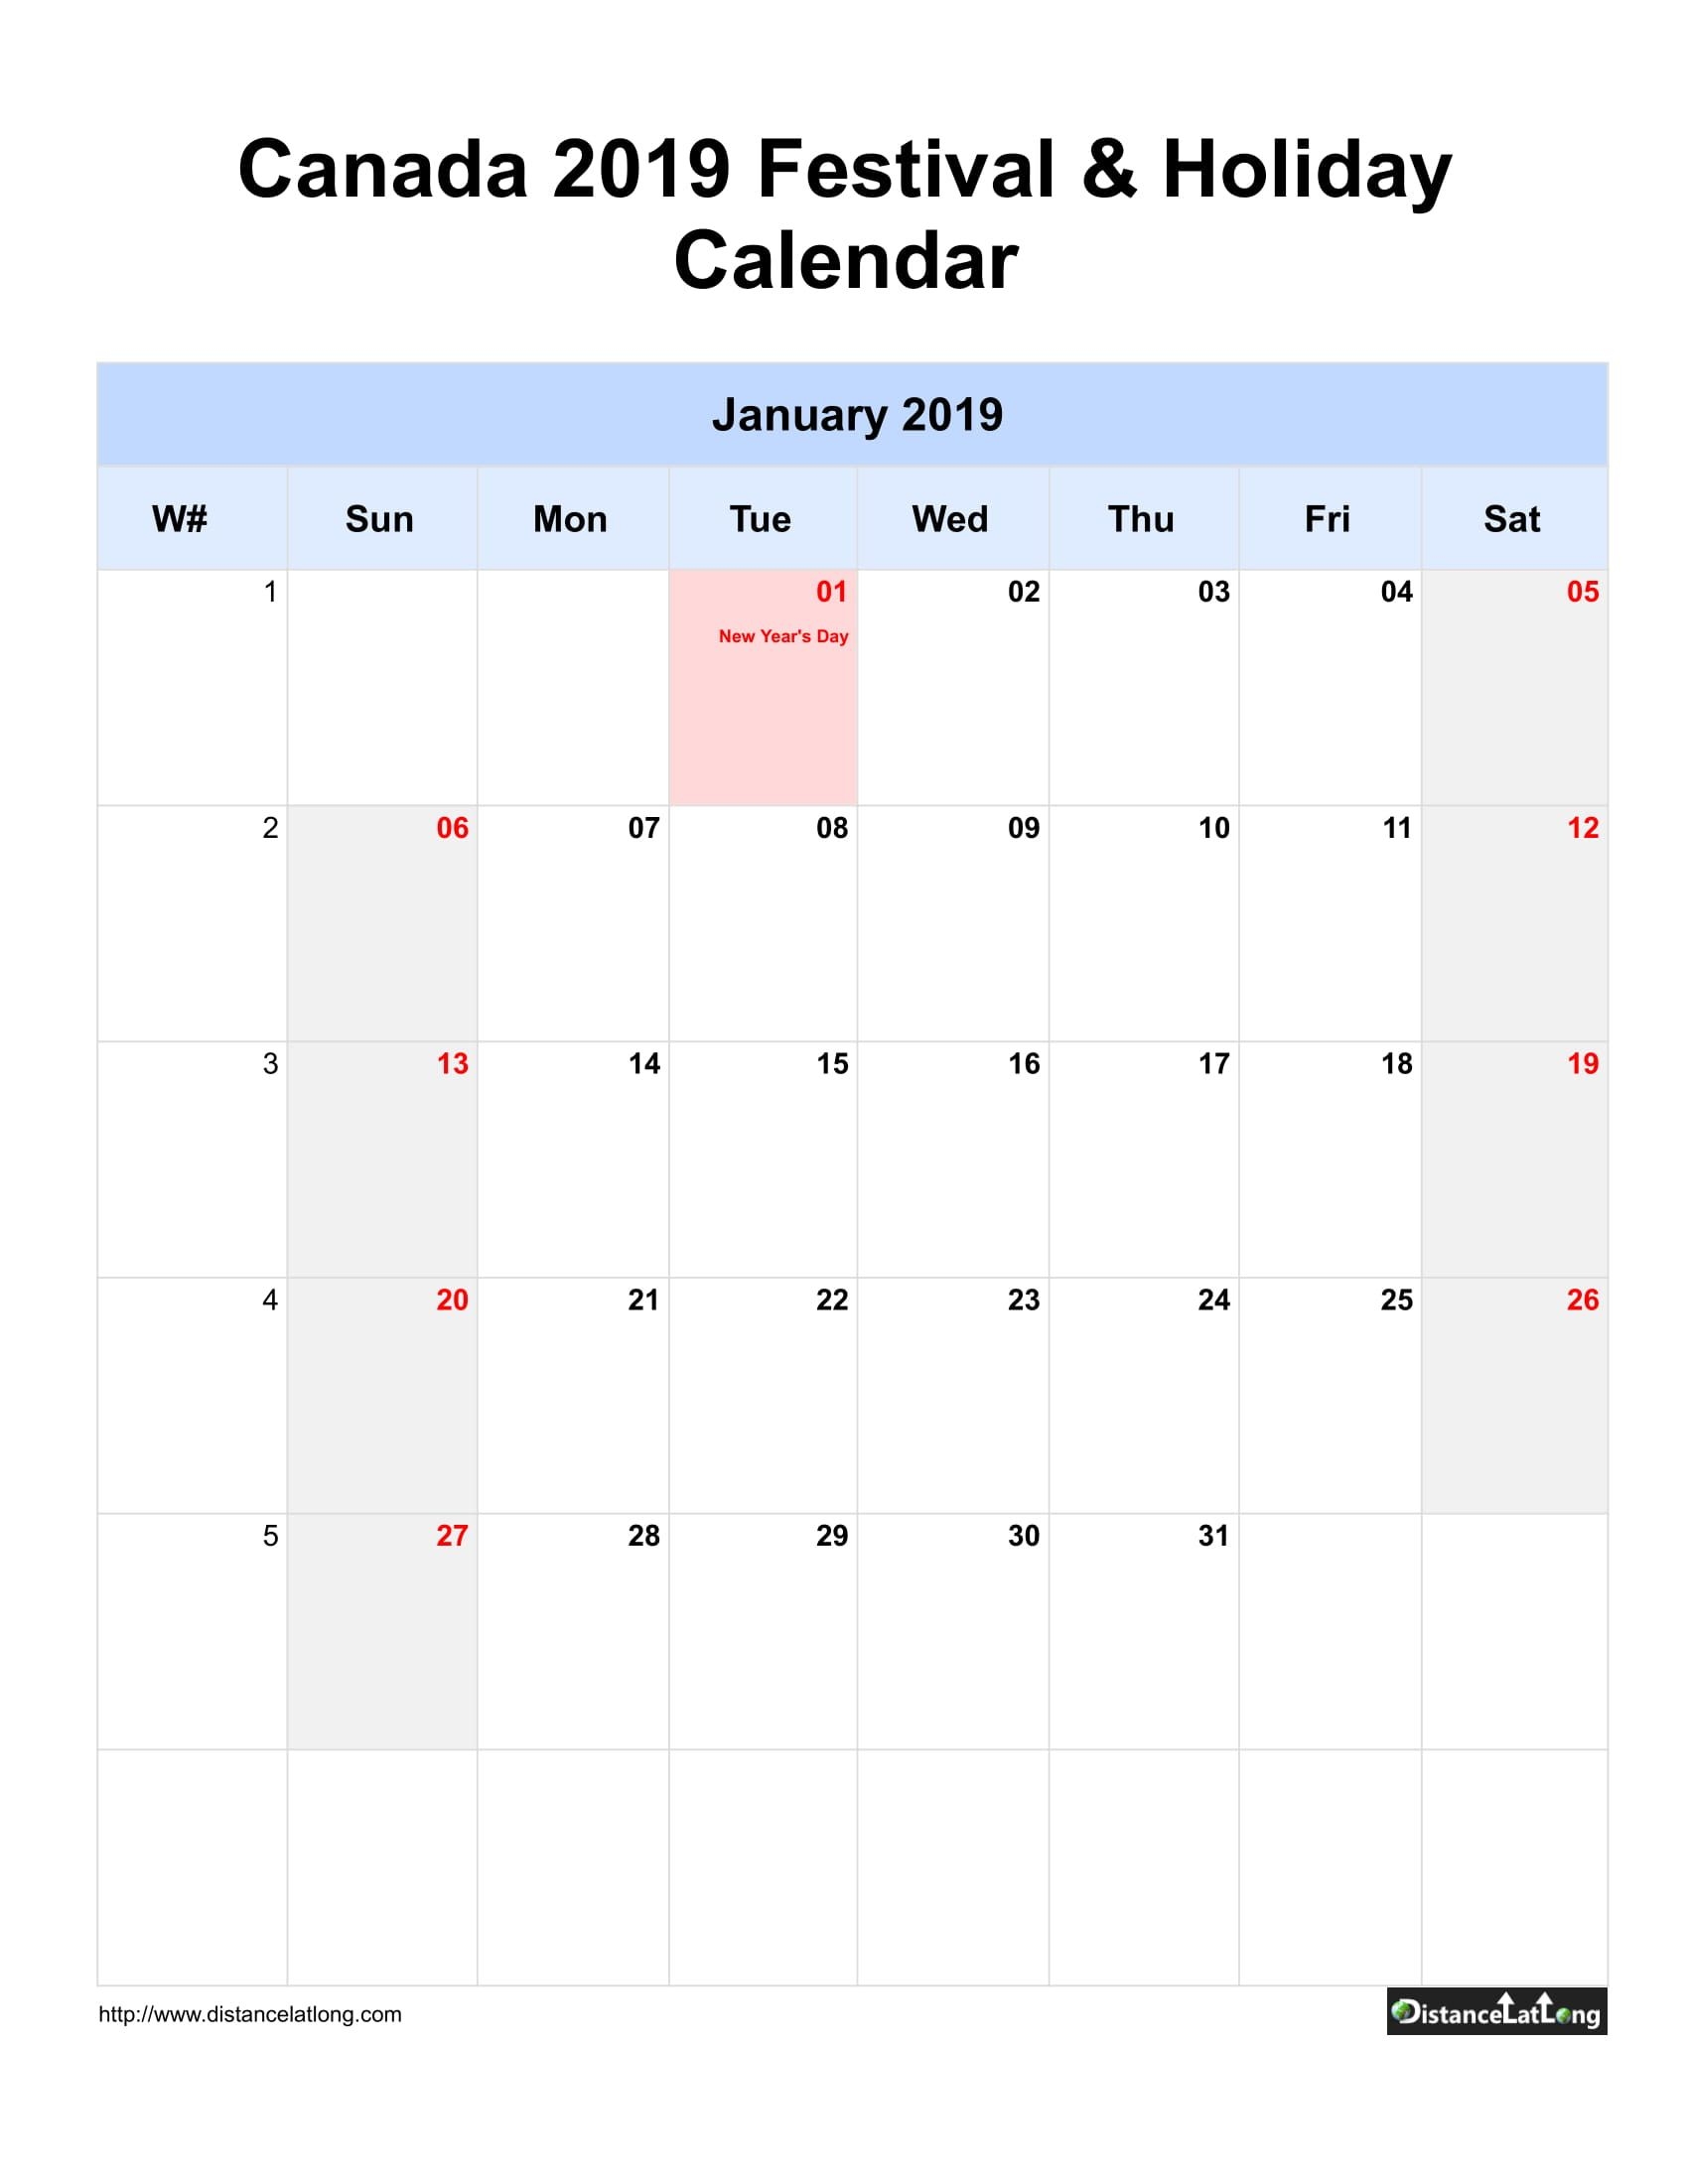 canada holiday calendar 2019 jpg templates distancelatlong